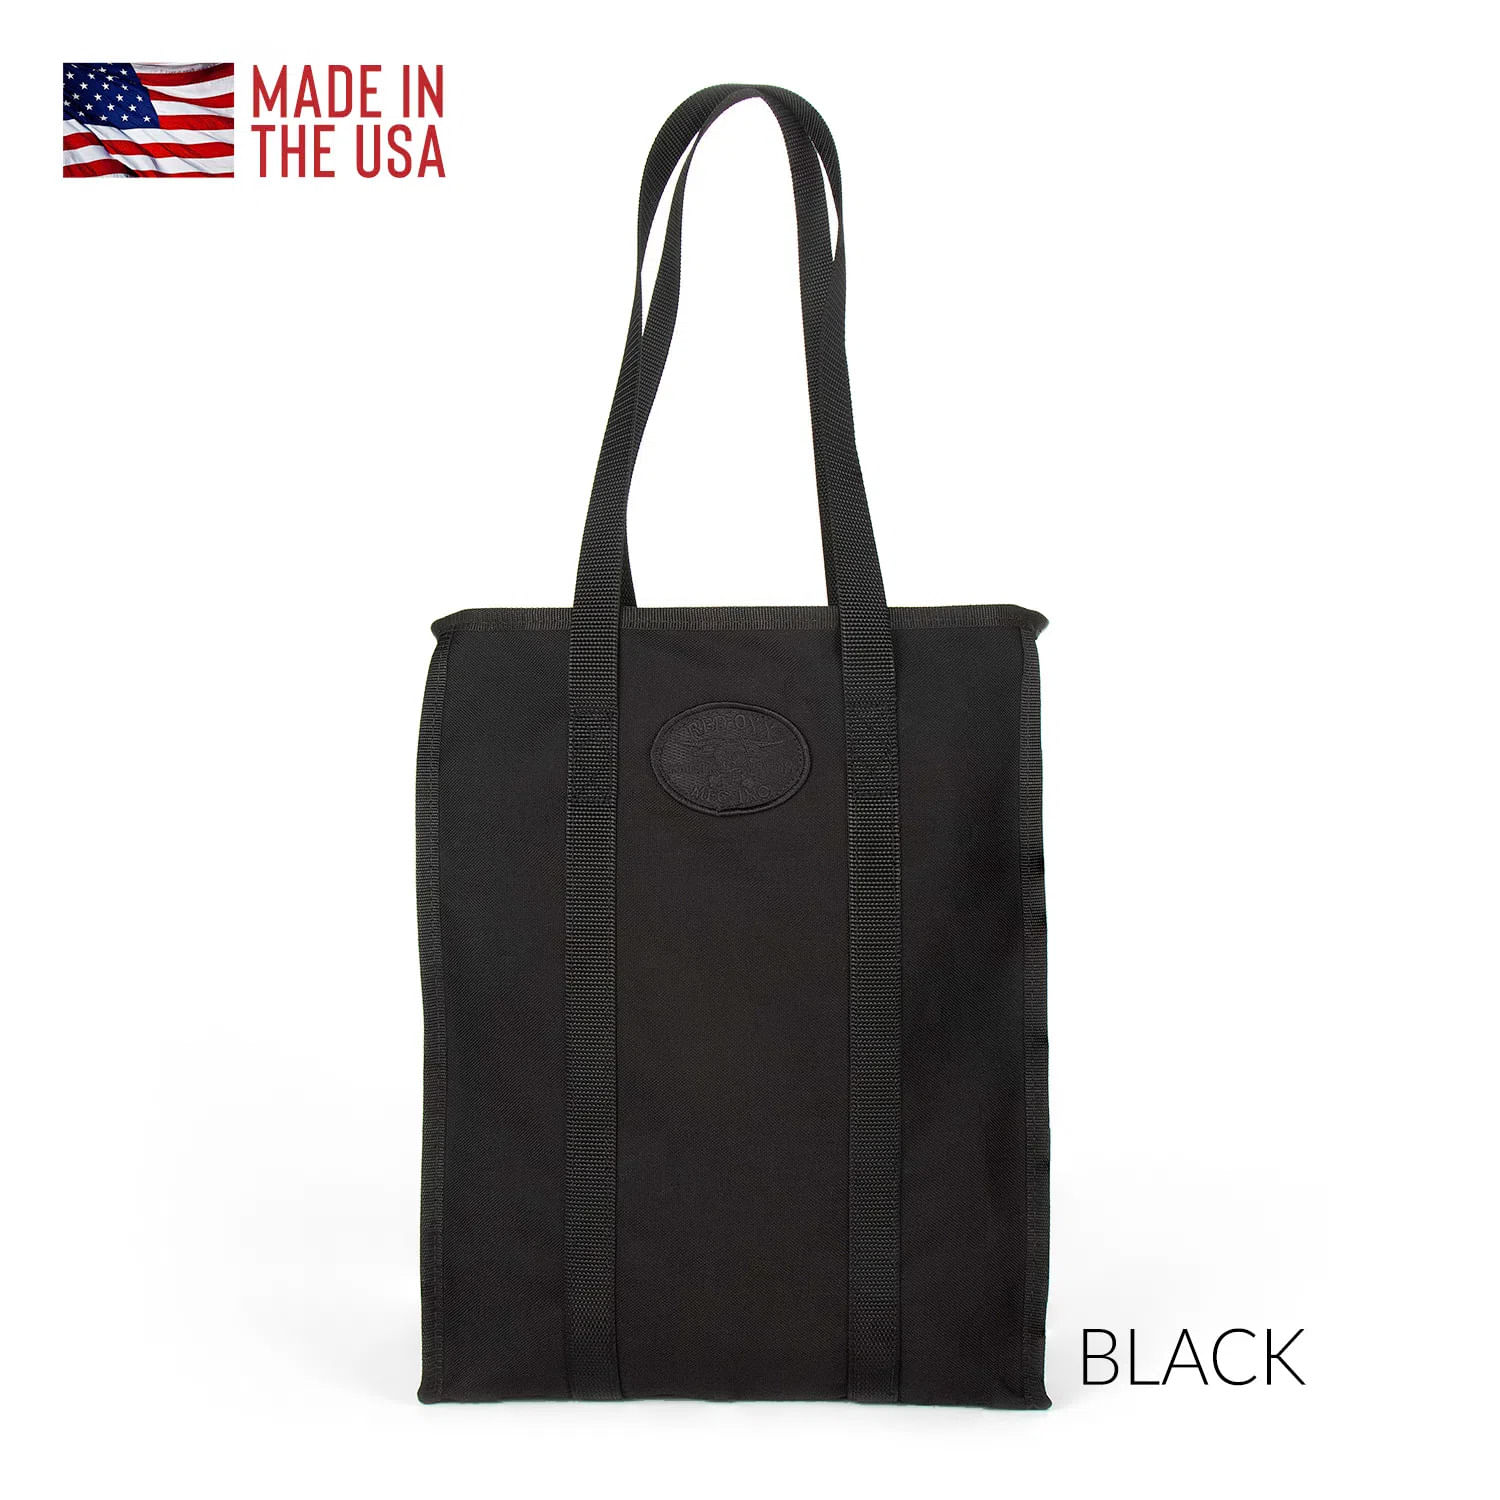 black grocery tote bag